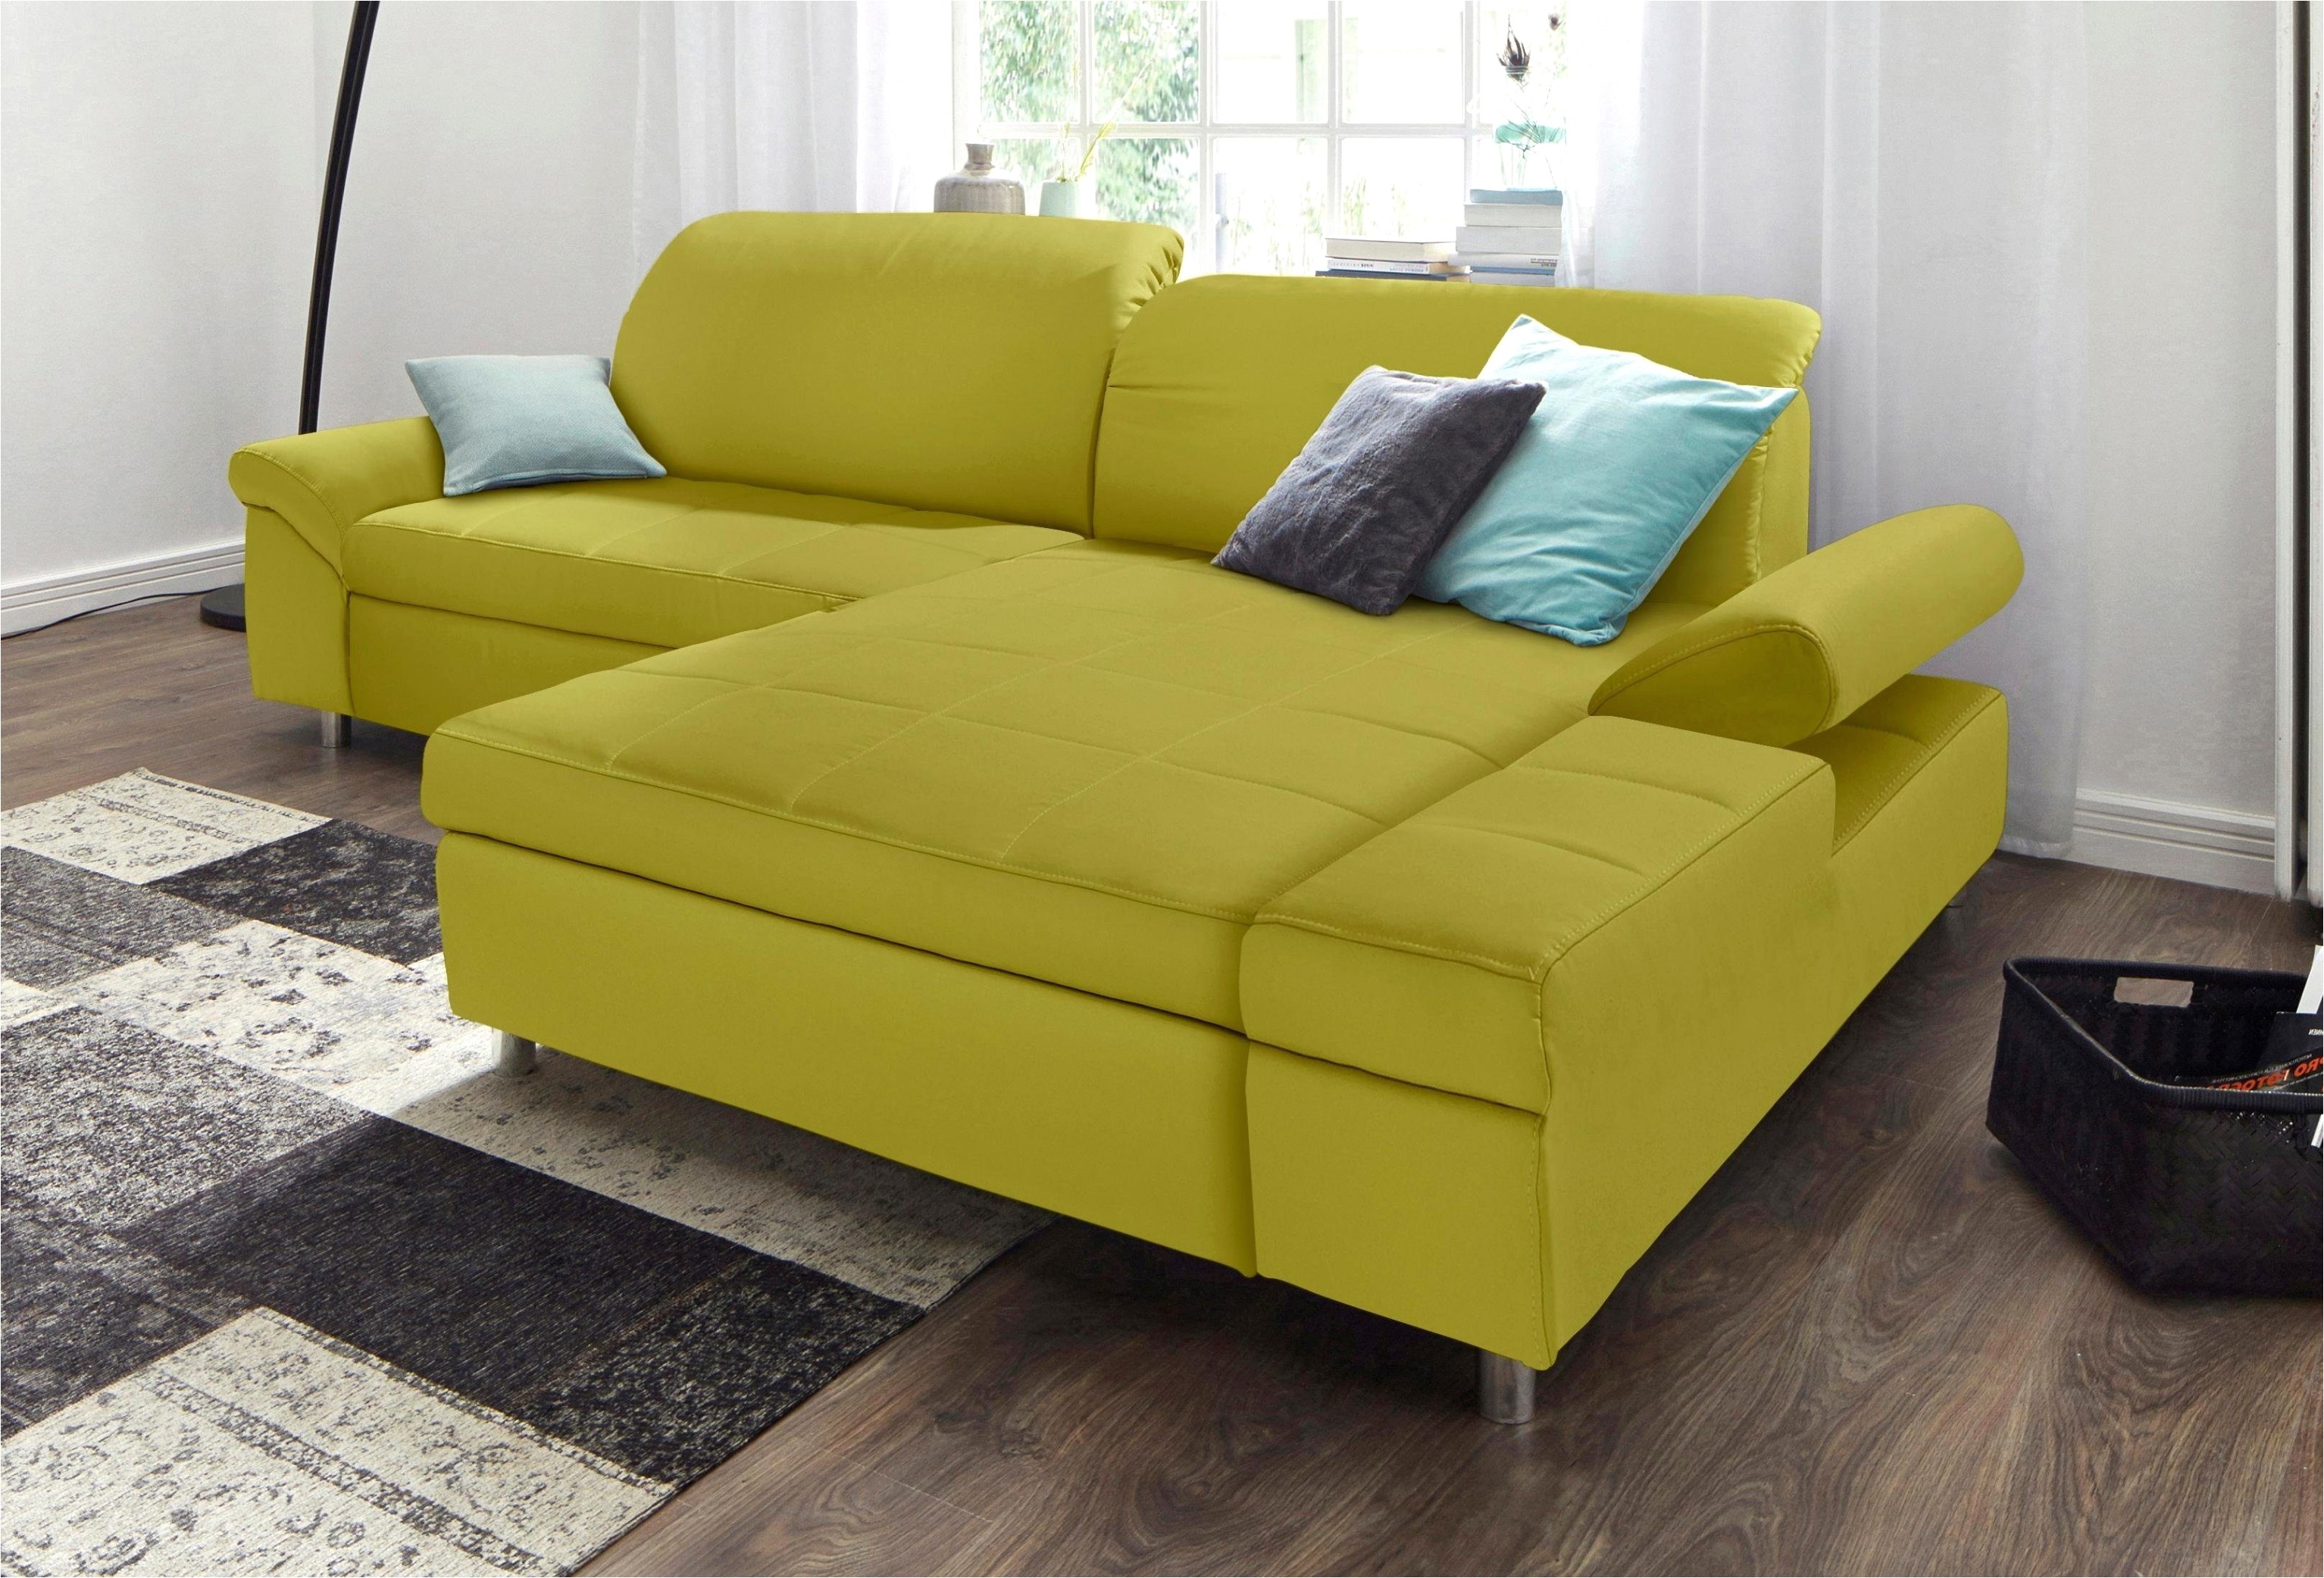 big sofa ikea mobel yellow living room lounge chair fresh palettenmobel lounge 0d